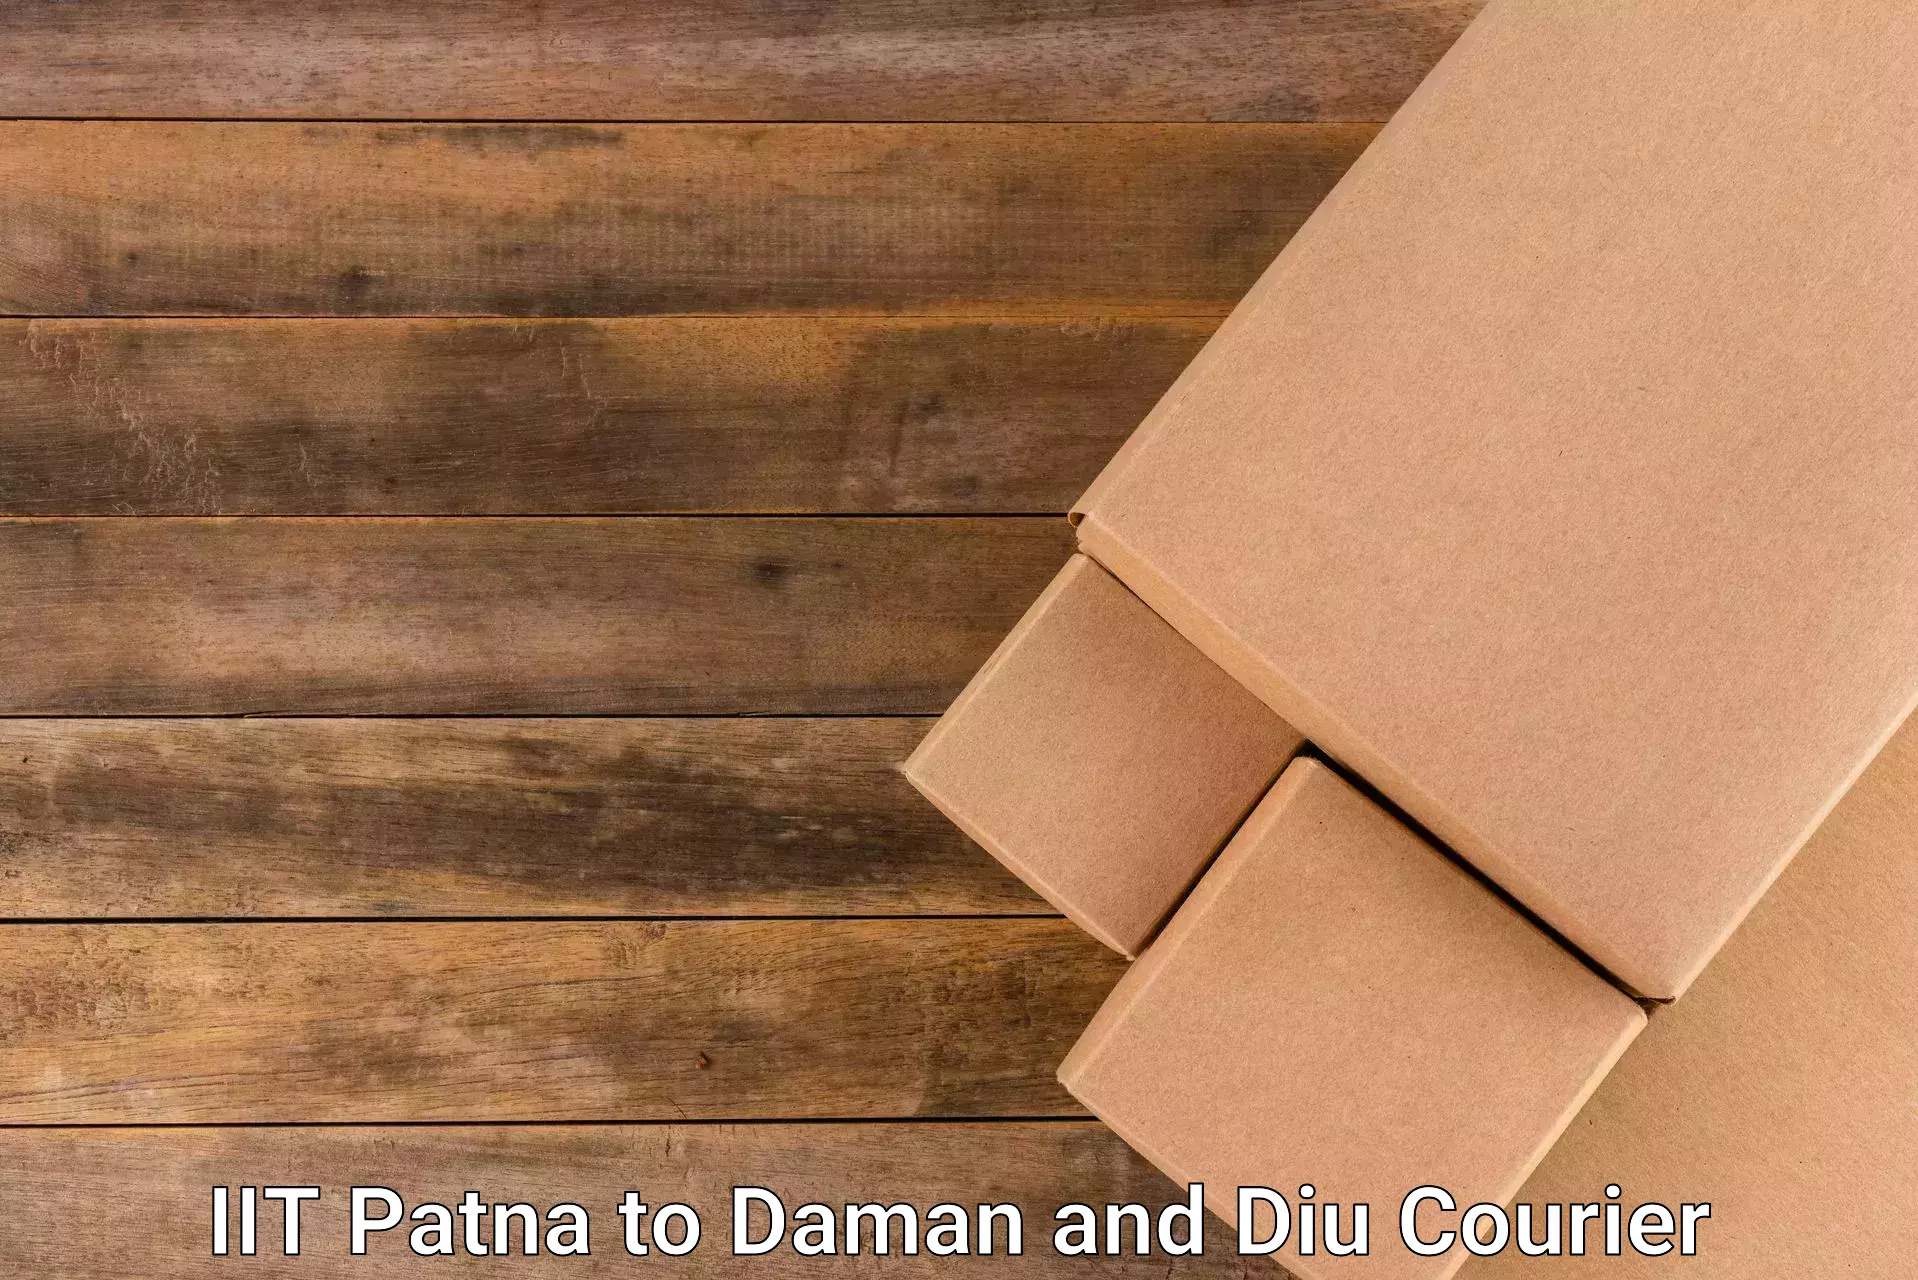 Professional courier handling IIT Patna to Diu